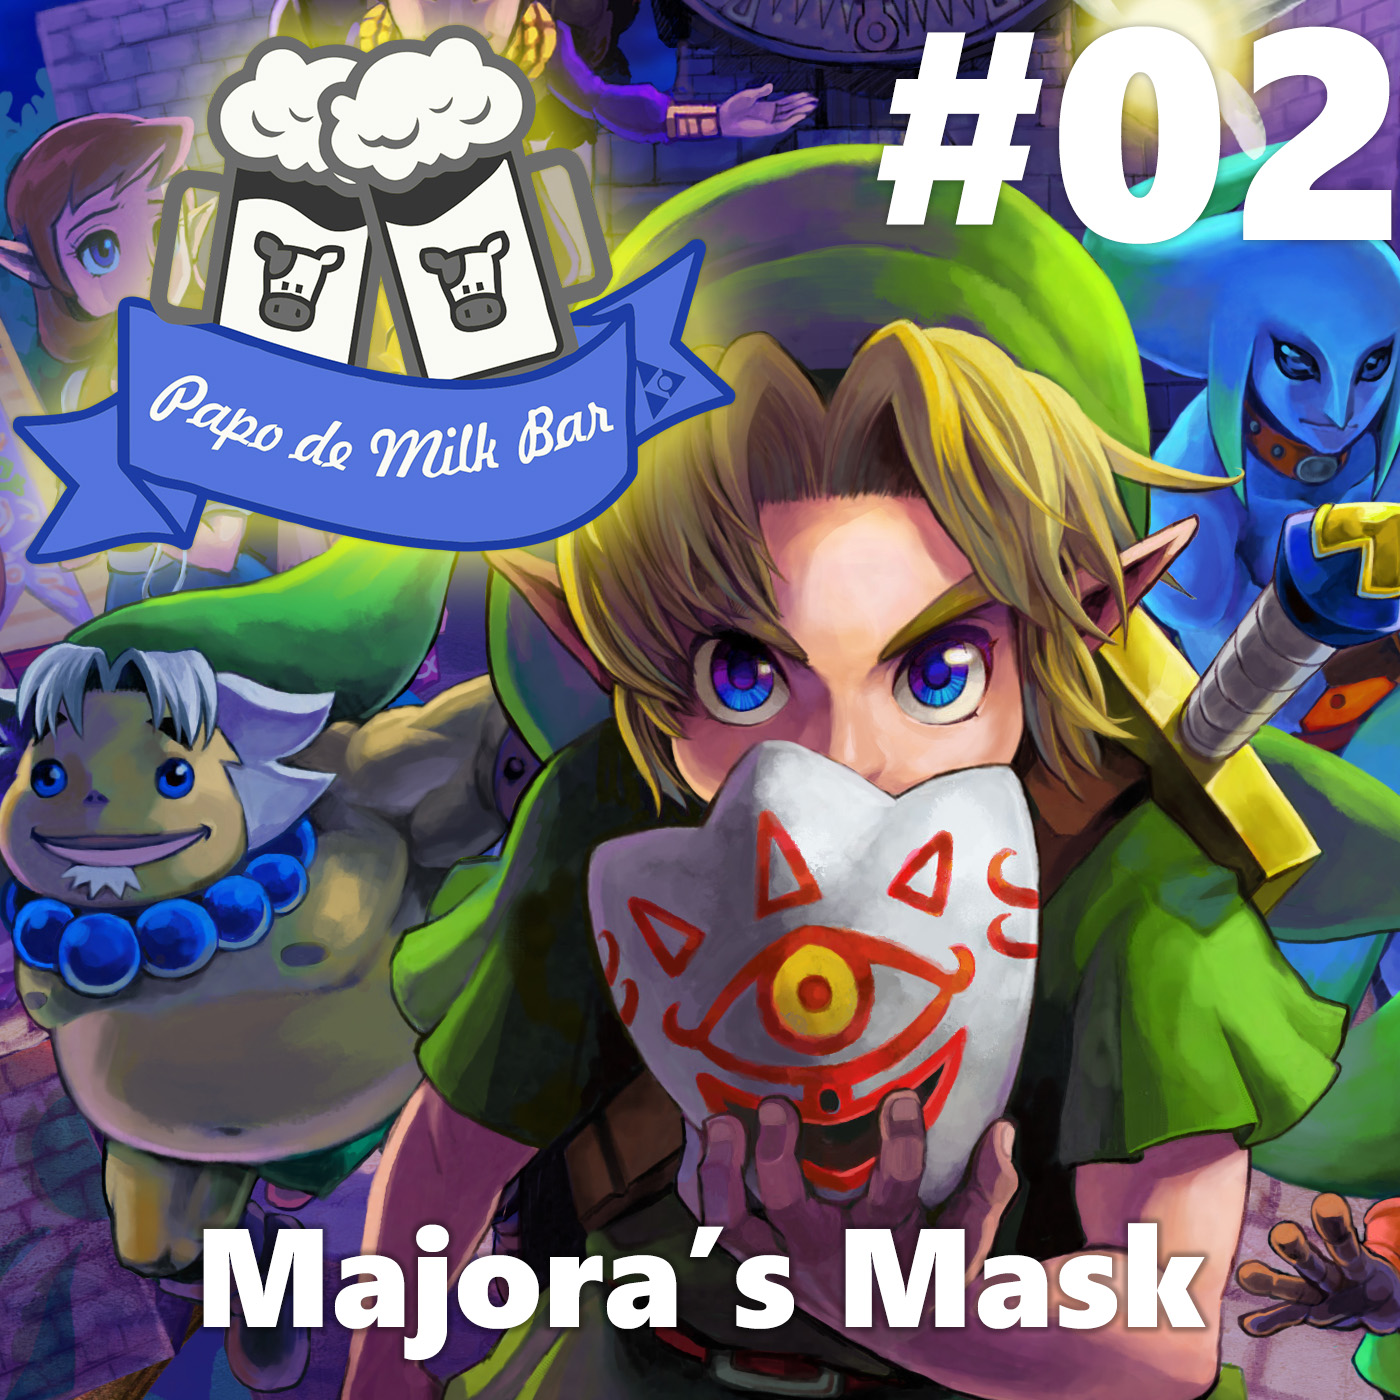 Papo de Milk Bar #02 – Majora’s Mask